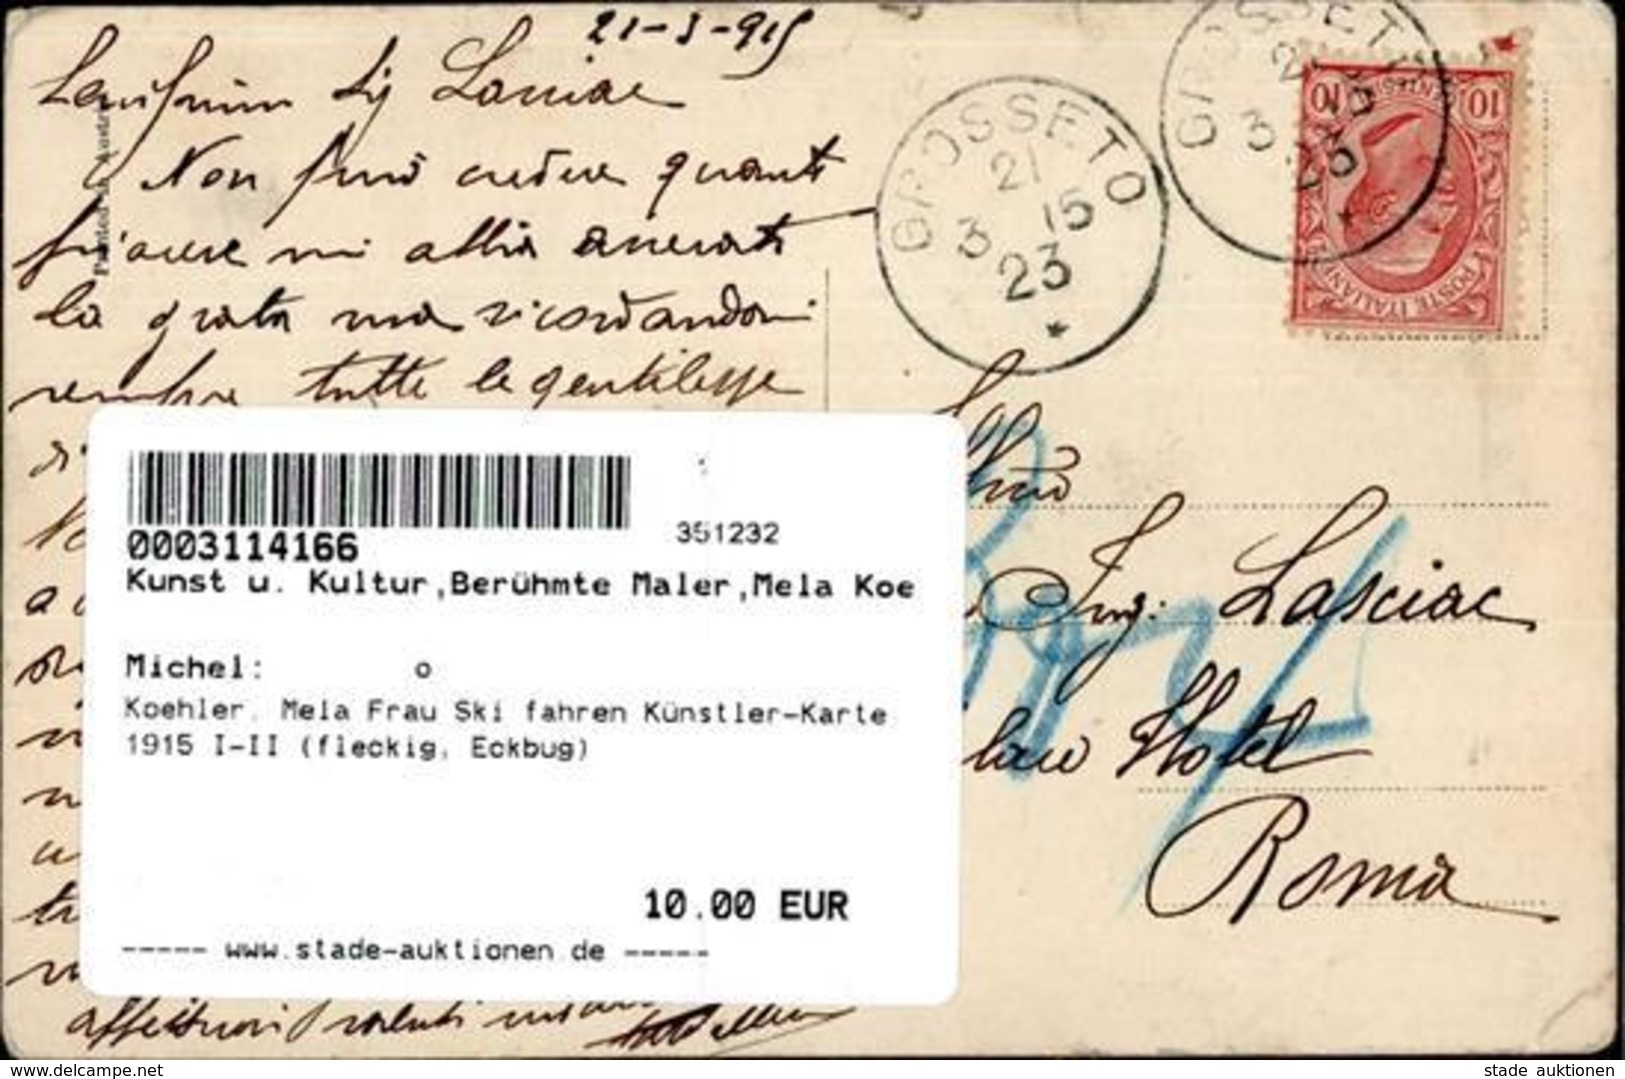 Koehler, Mela Frau Ski Fahren Künstler-Karte 1915 I-II (fleckig, Eckbug) - Köhler, Mela